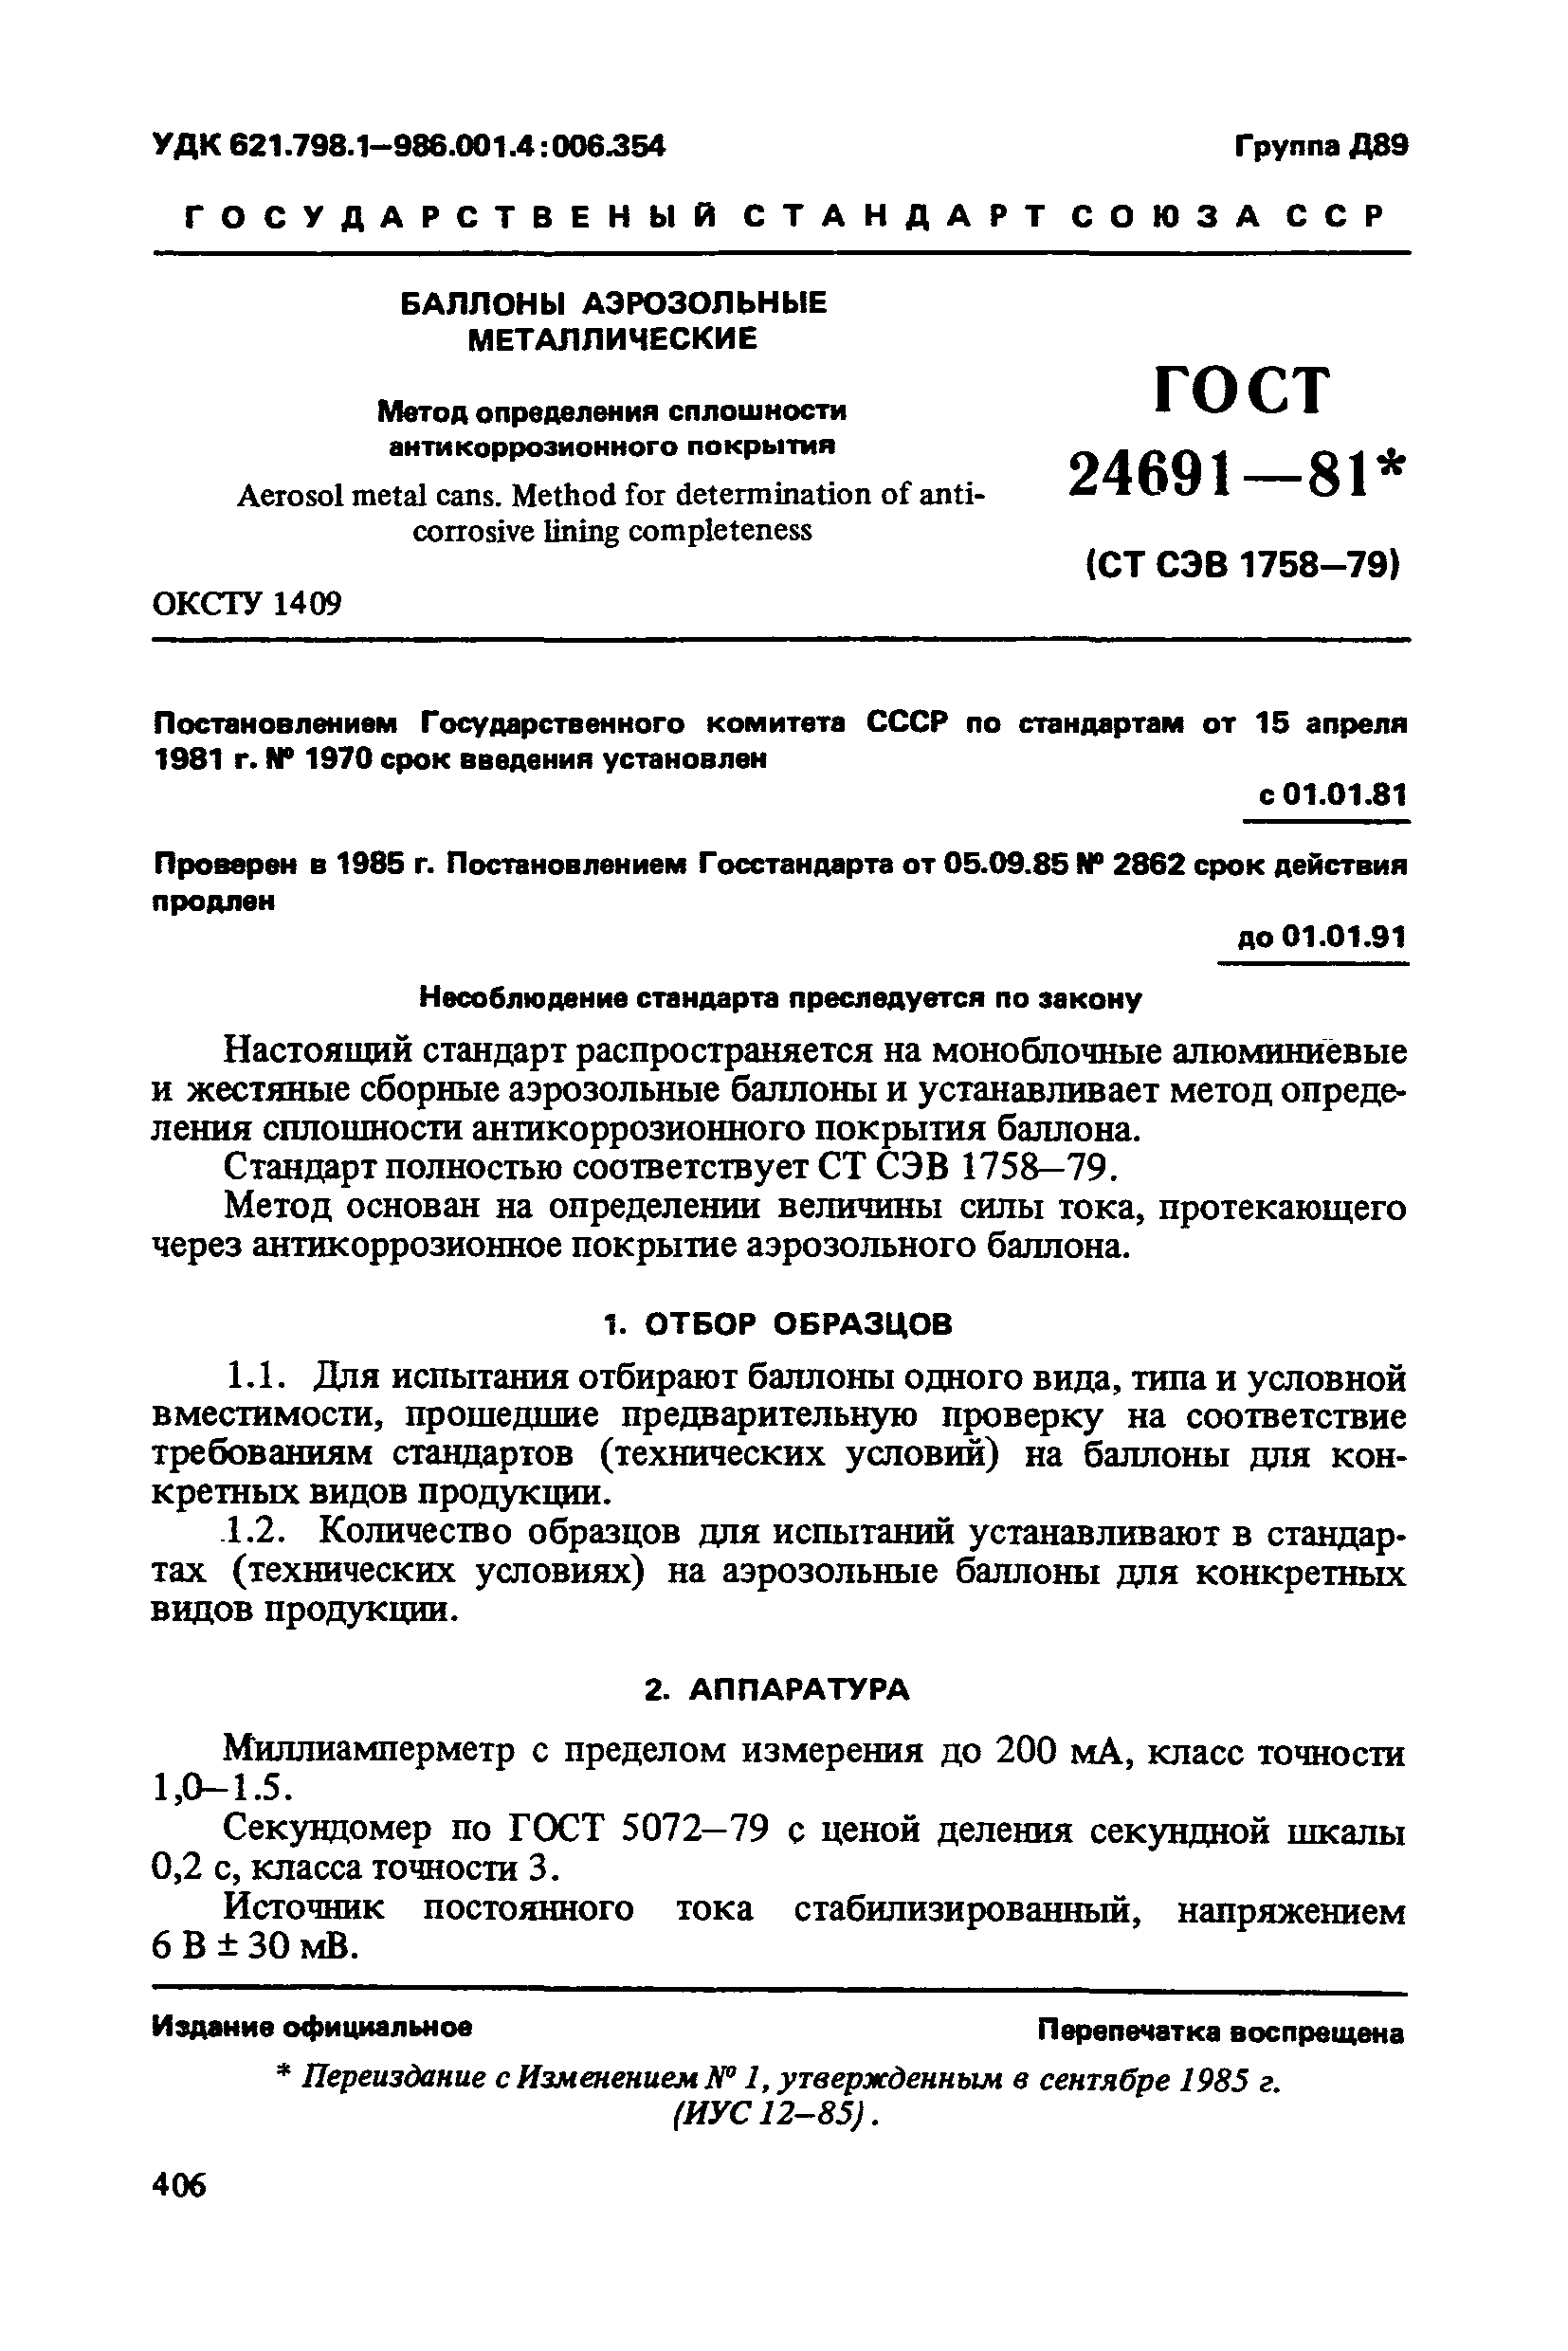 ГОСТ 24691-81